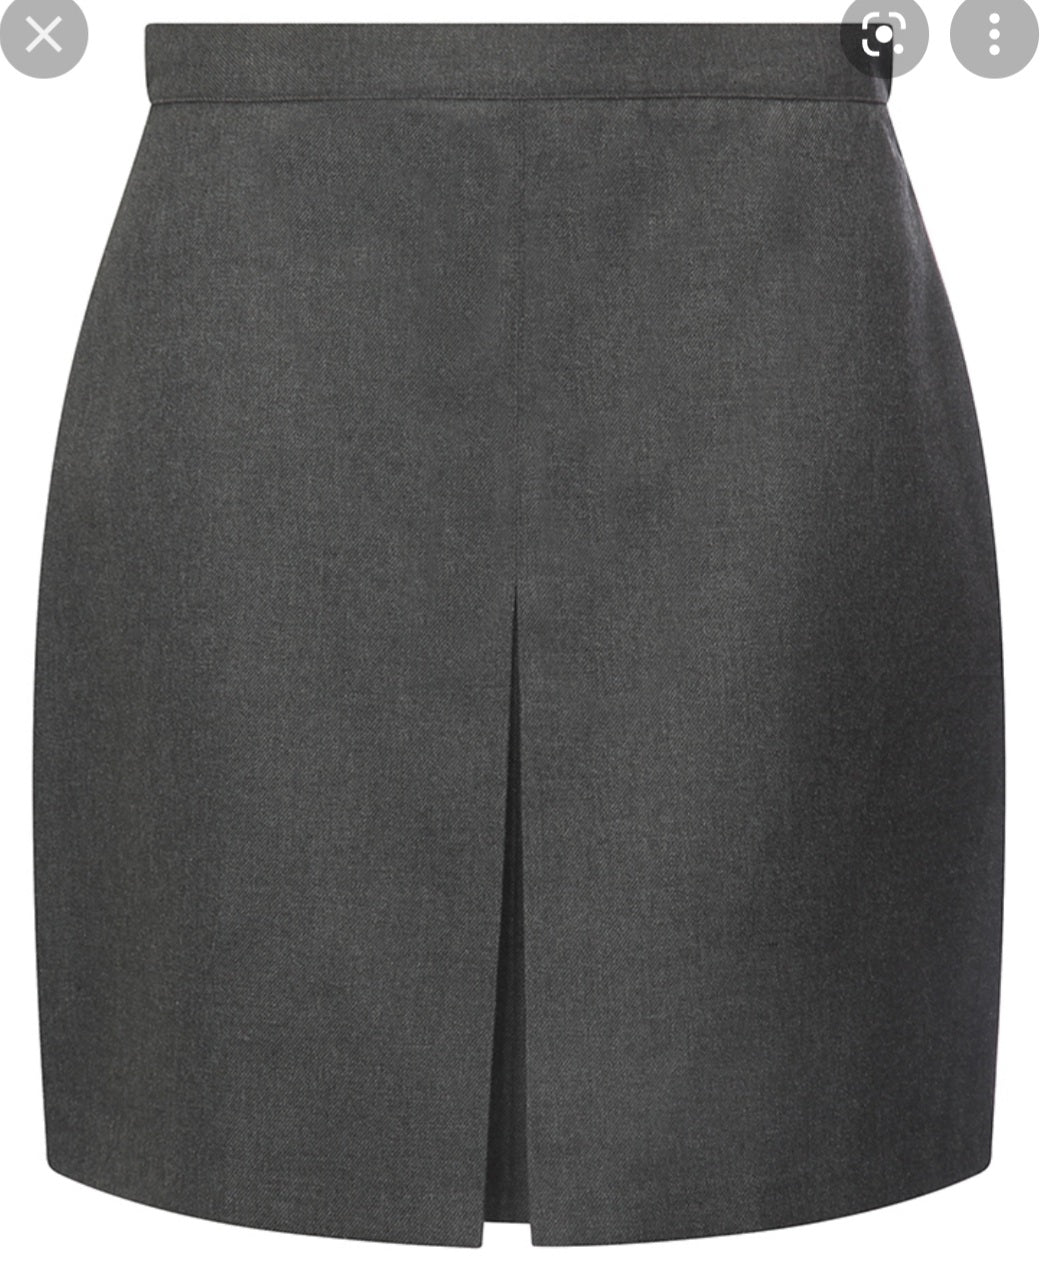 grey pleats front skort *pre-order* – STYLEGAL